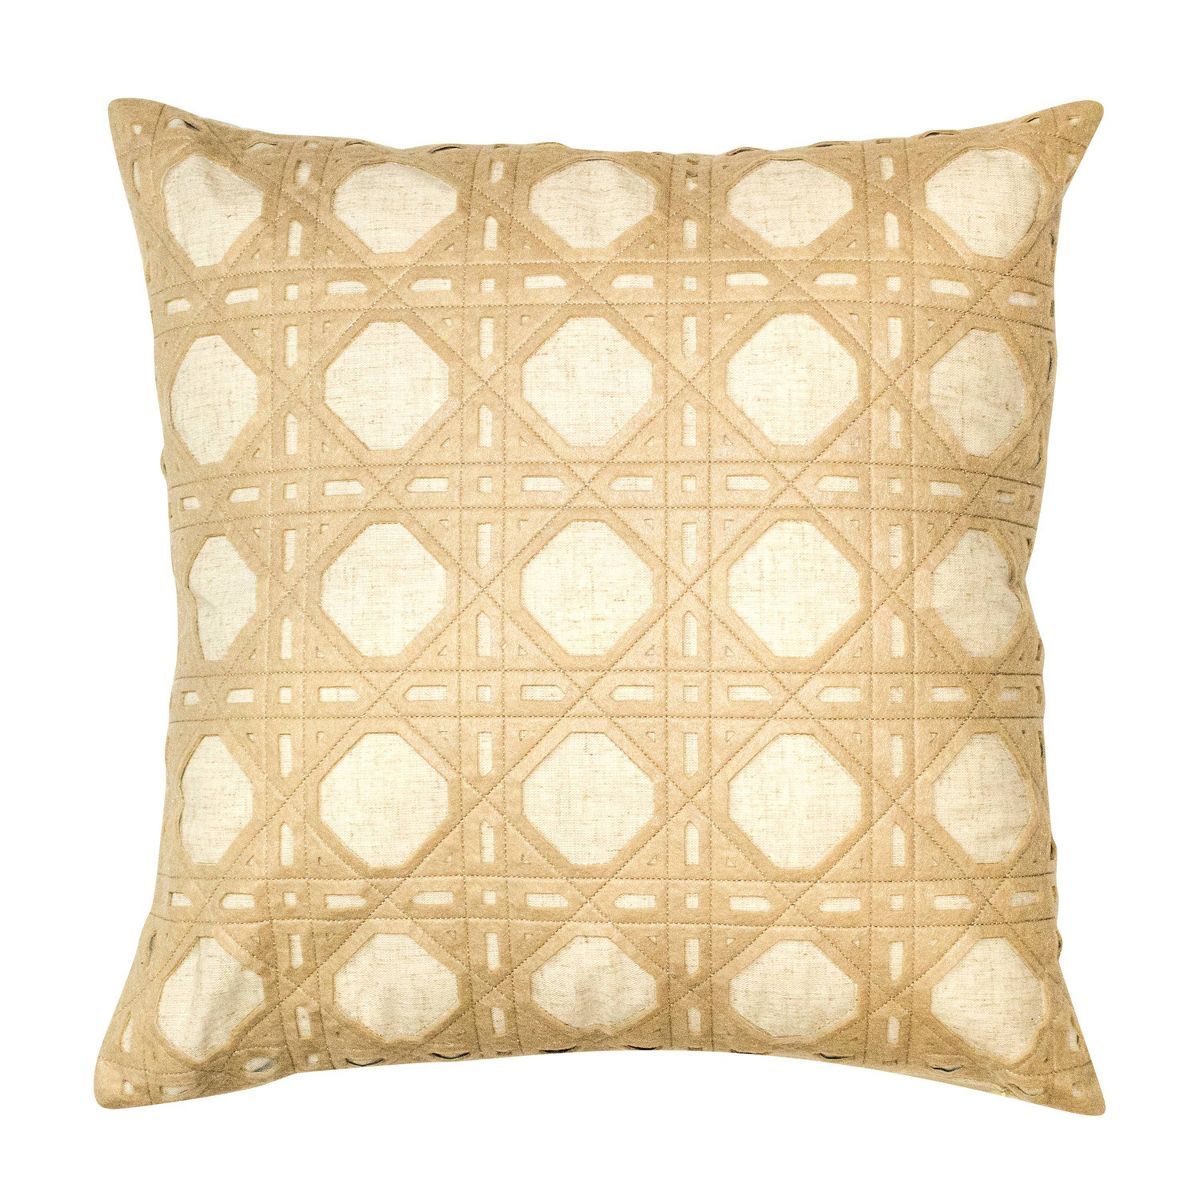 Edie@Home 20"x20" Rattan Geometric Square Throw Pillow Taupe/Cream | Target